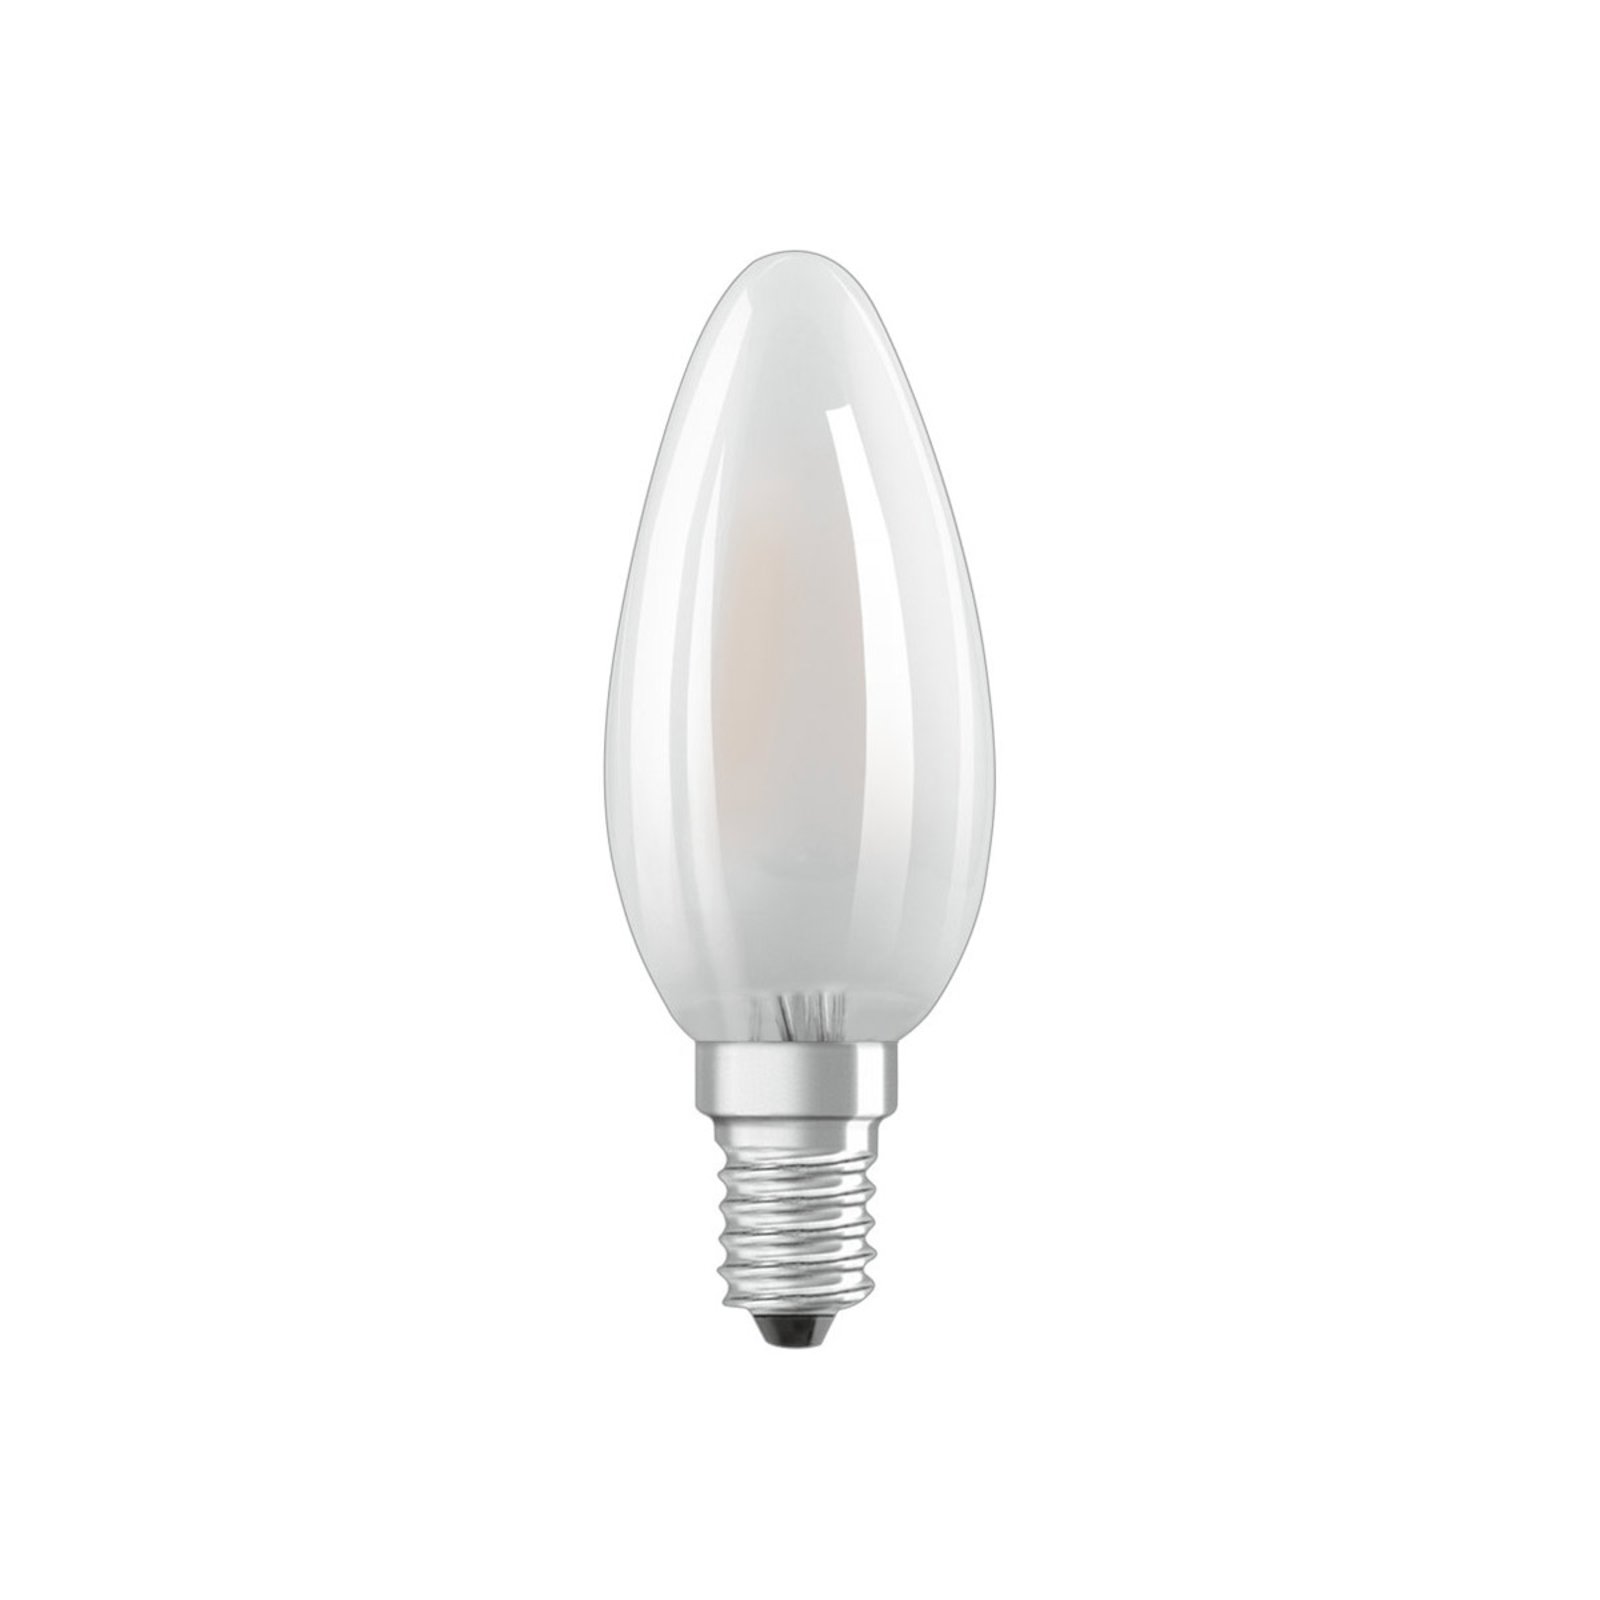 OSRAM LED-kronljuslampa E14 4 W 2 700 K 470 lm